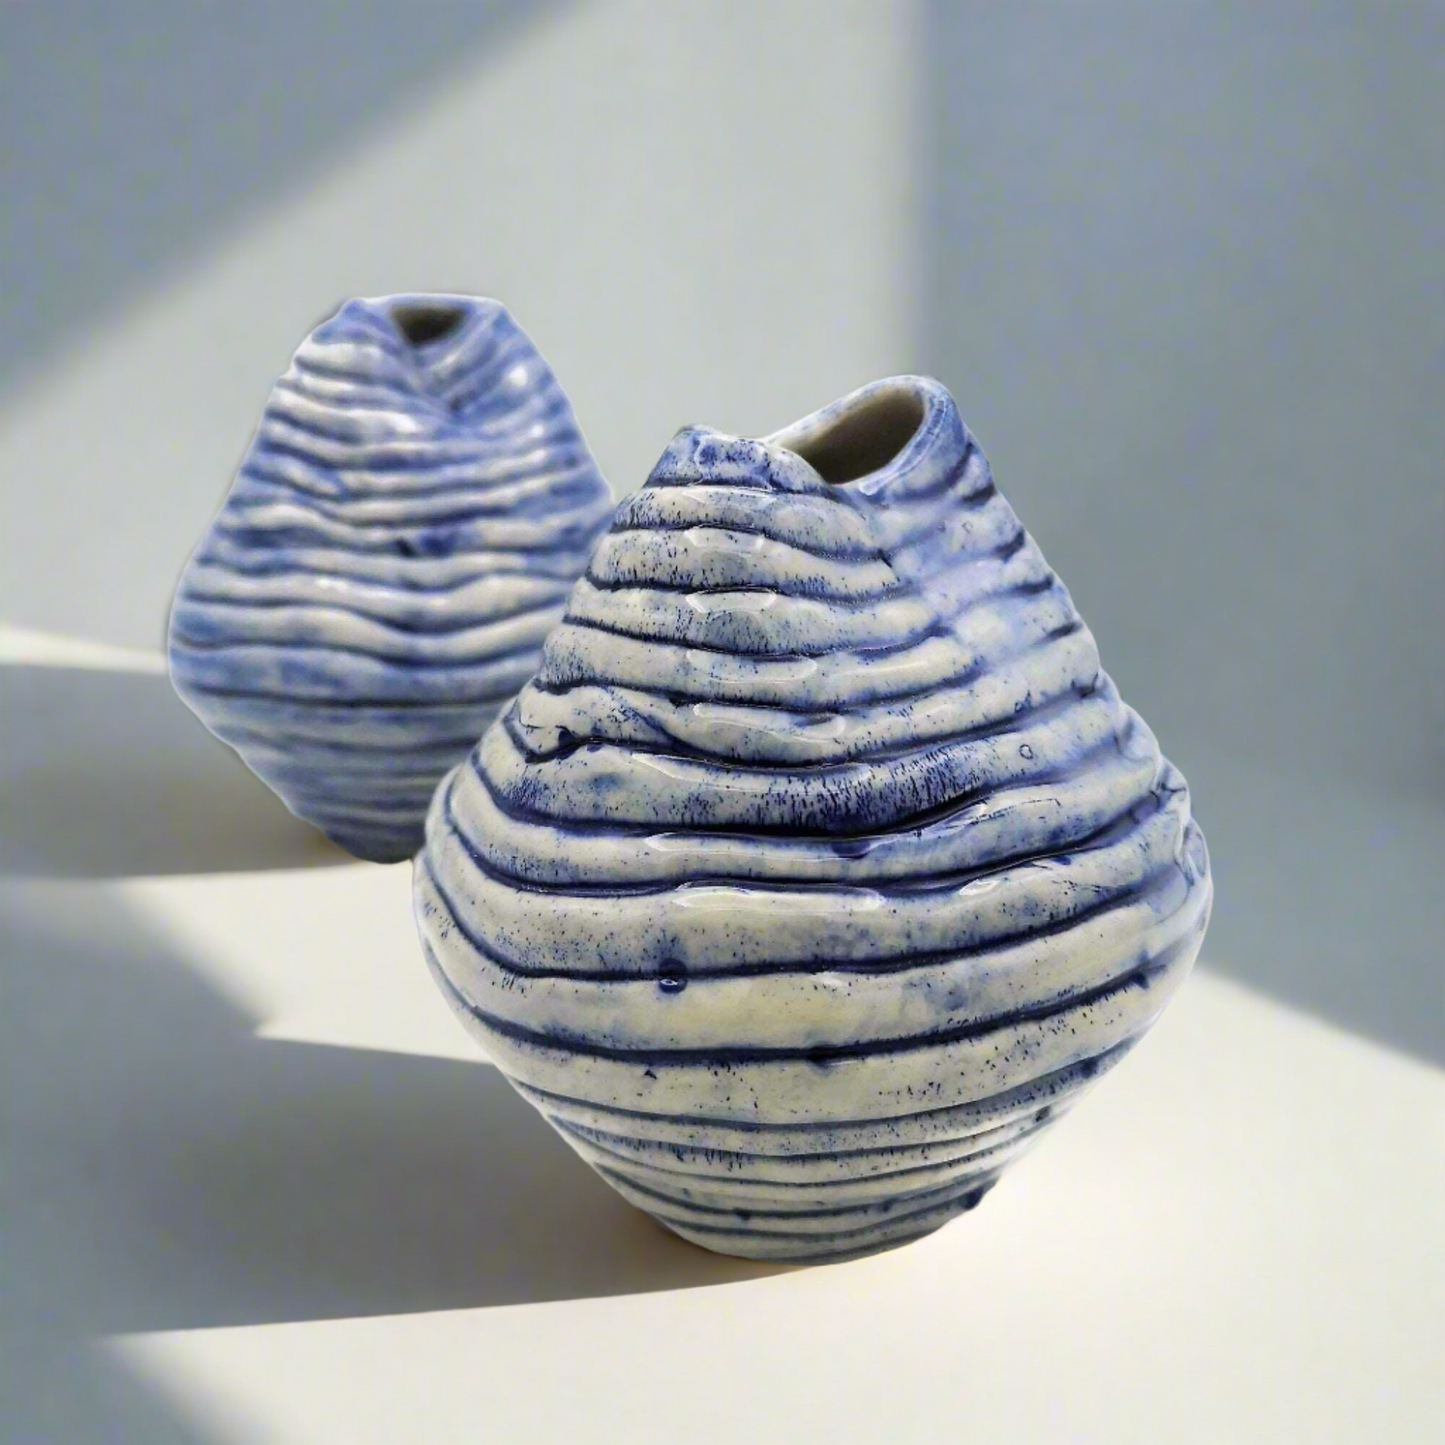 1pc Blue Handmade Ceramic Vase - Irregular Shaped Pottery, Abstract Sculpture Vessel, Best Seller, Mom Birthday Gift from Daughter